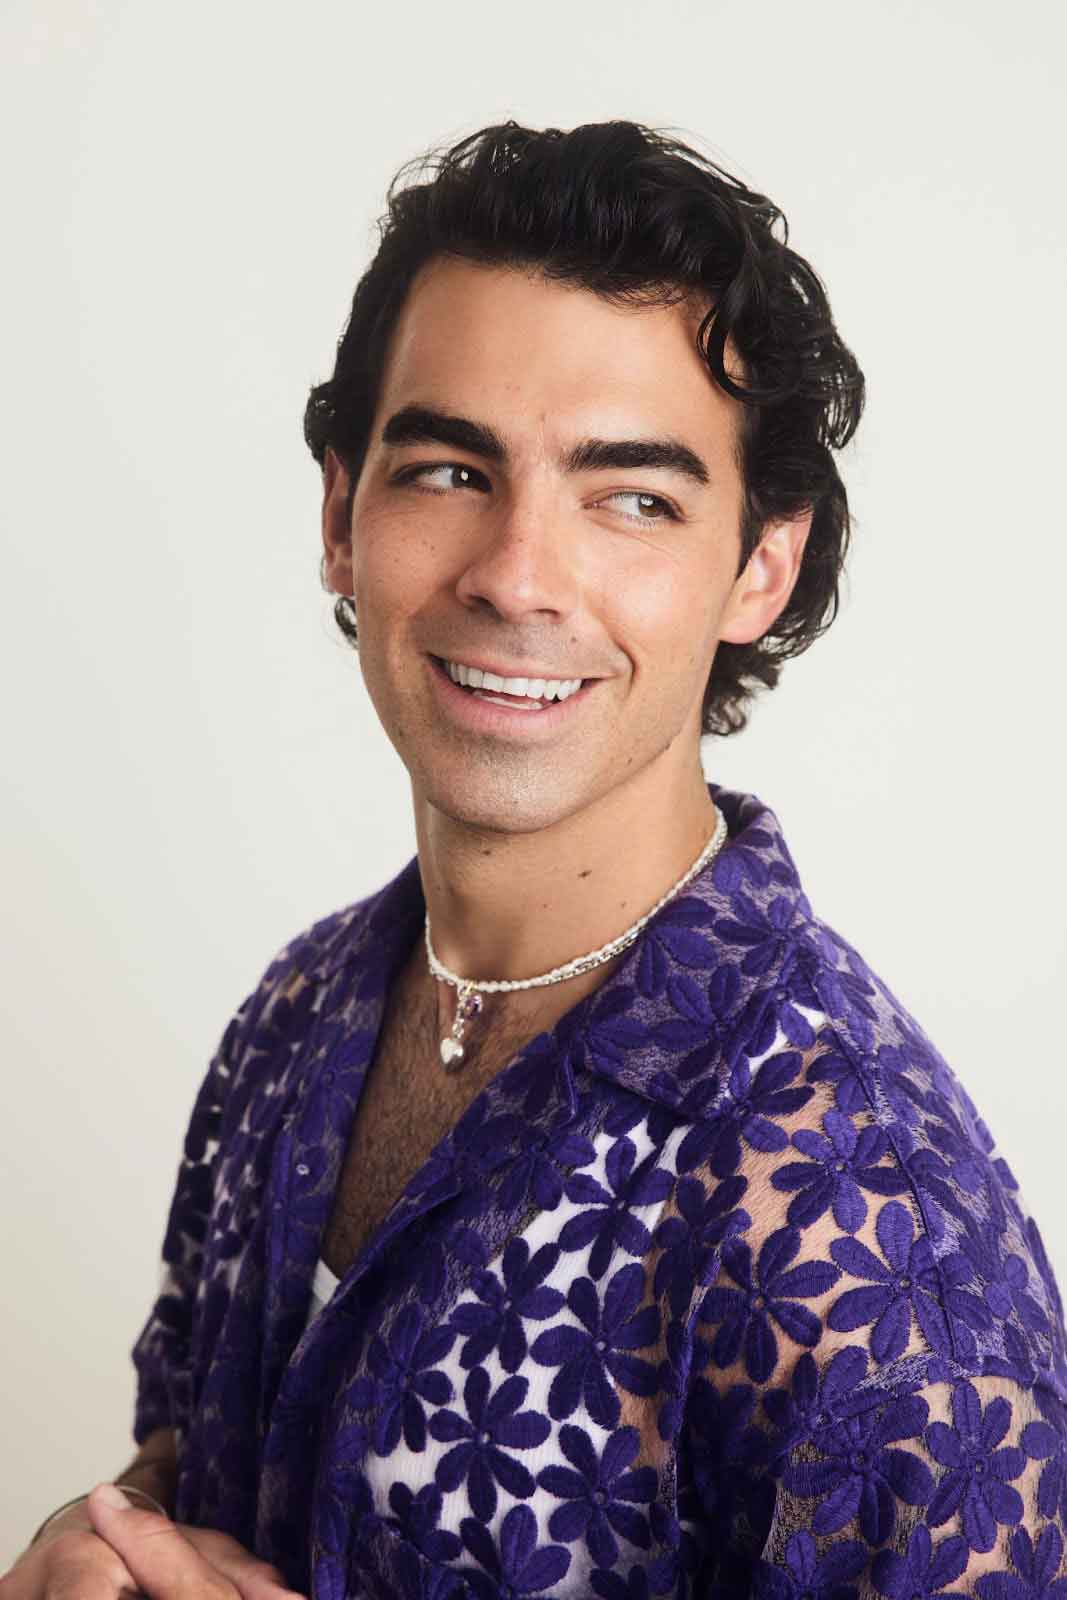 Joe Jonas wrinkle-free, smiling, and wearing a purple floral shirt